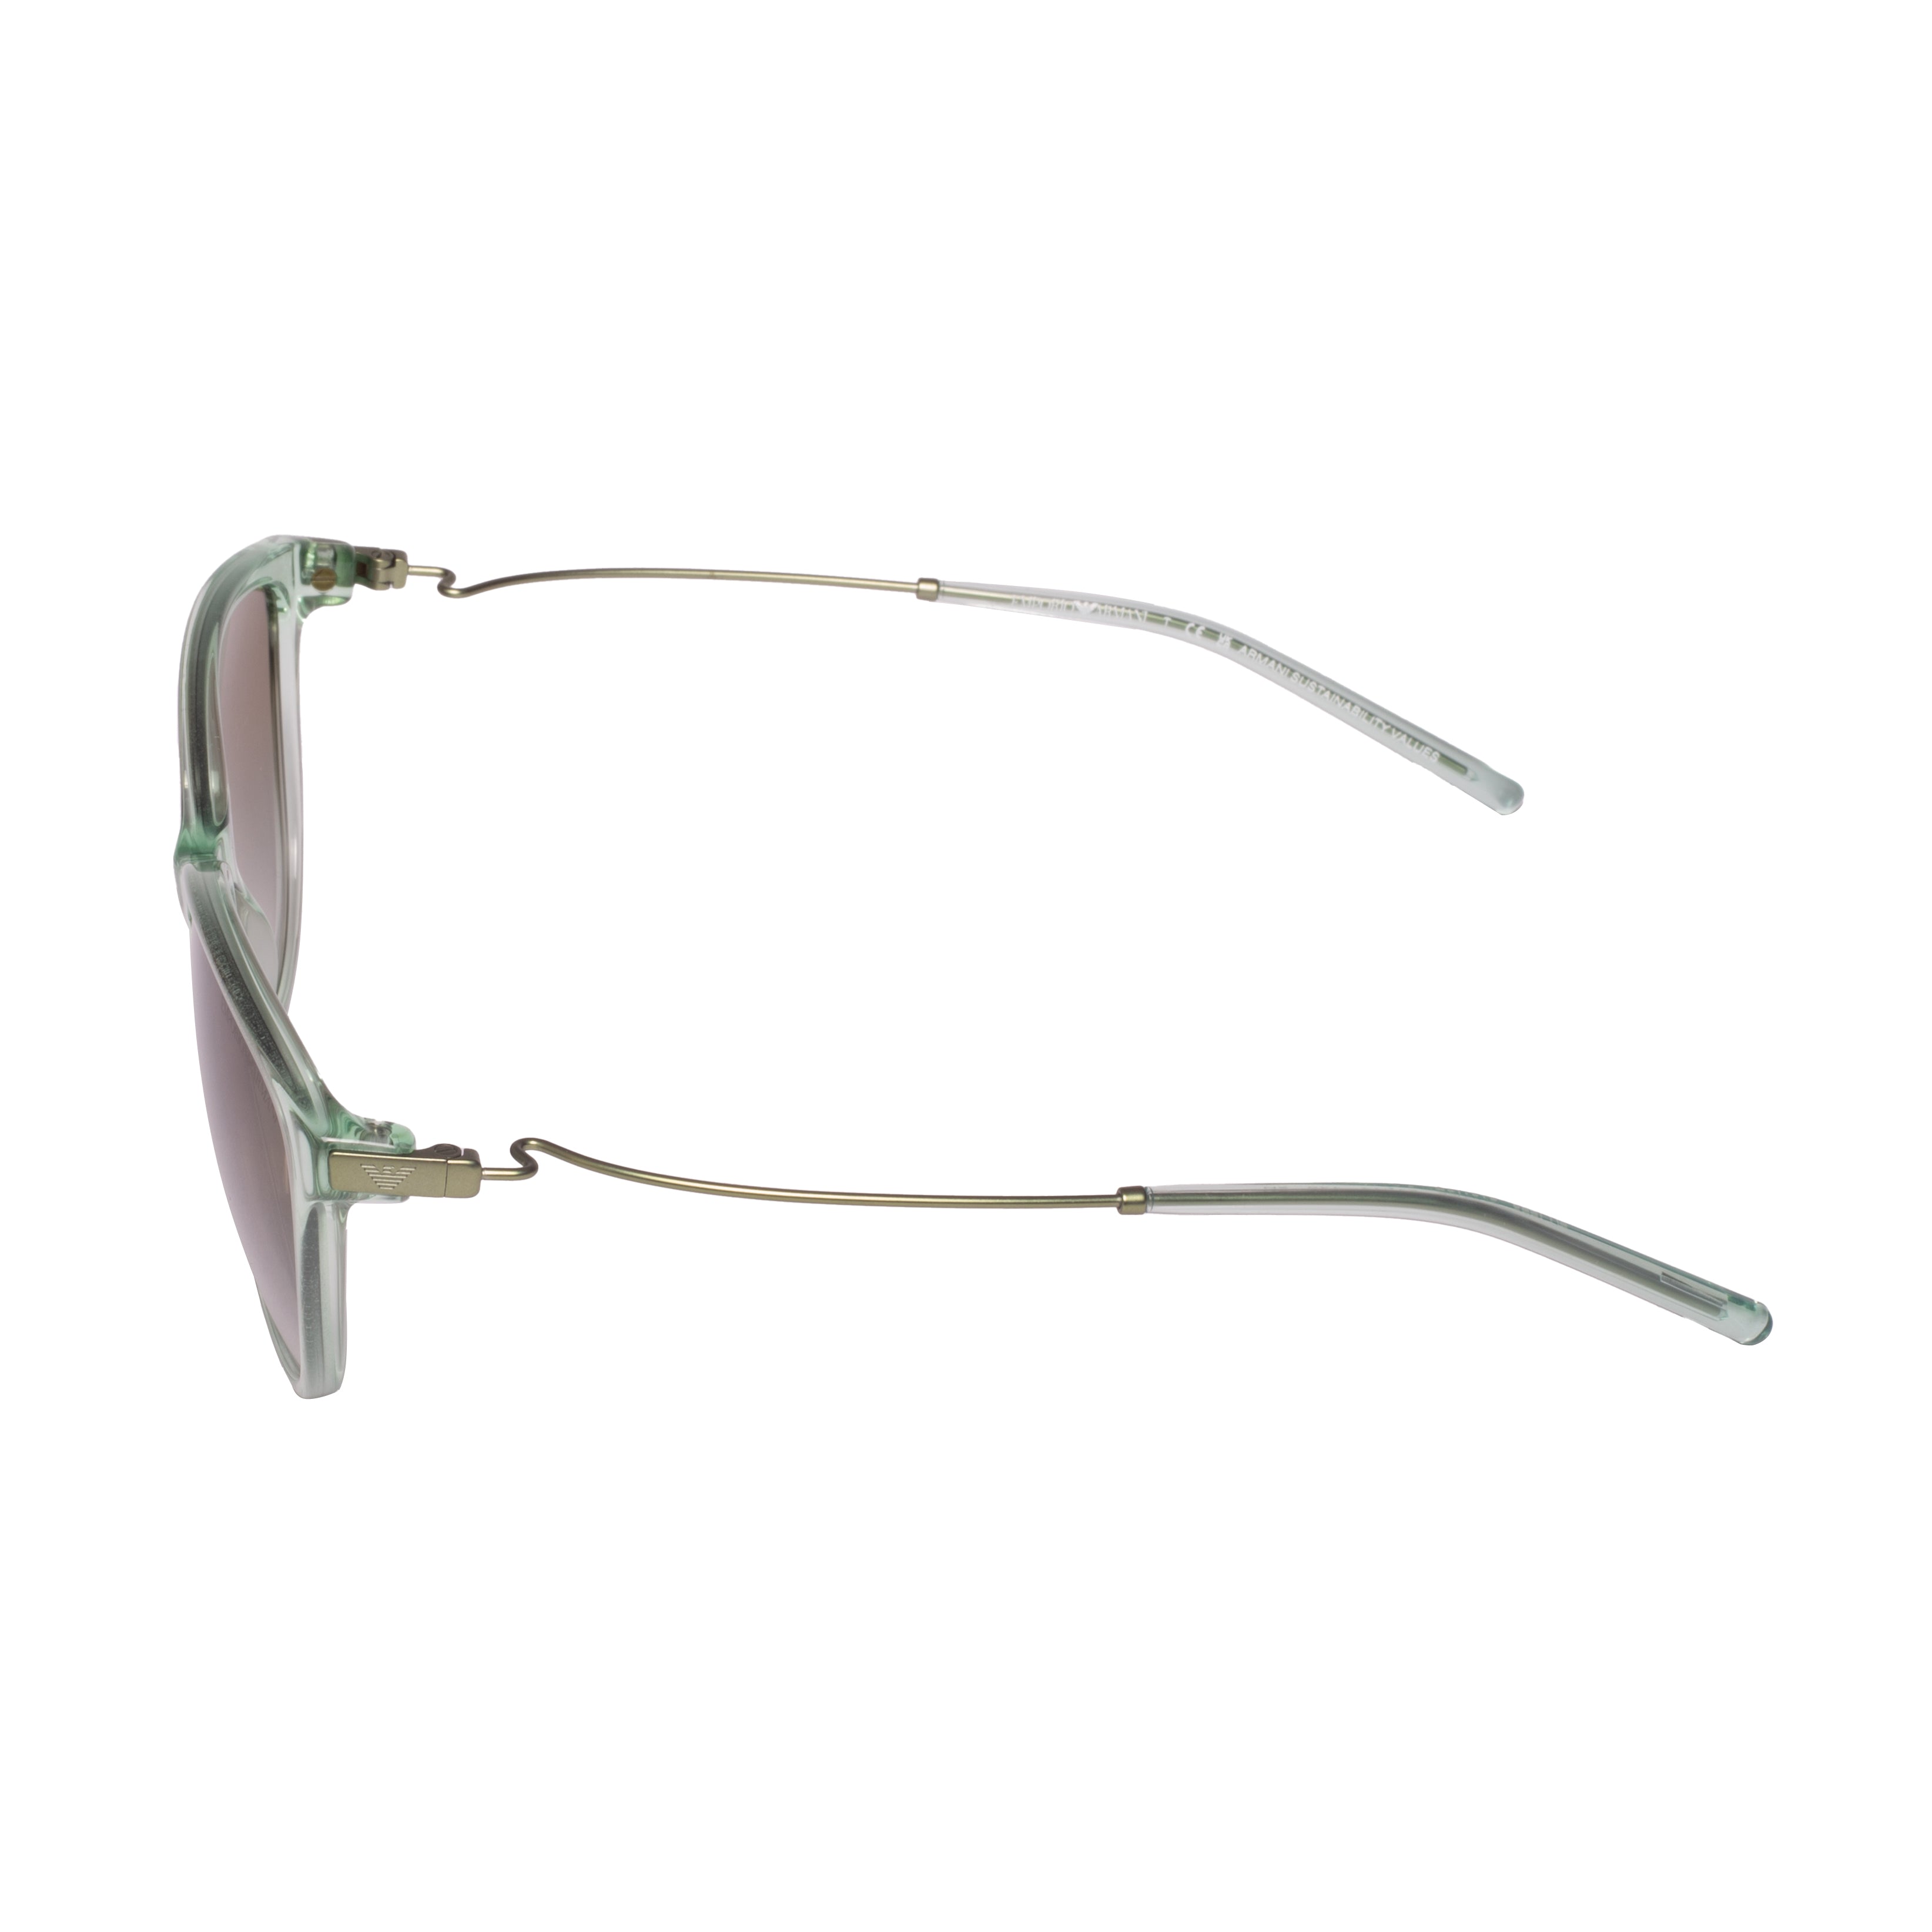 Emporio Armani-EA4220-54-61078 Sunglasses - Premium Sunglasses from Emporio Armani - Just Rs. 14590! Shop now at Laxmi Opticians